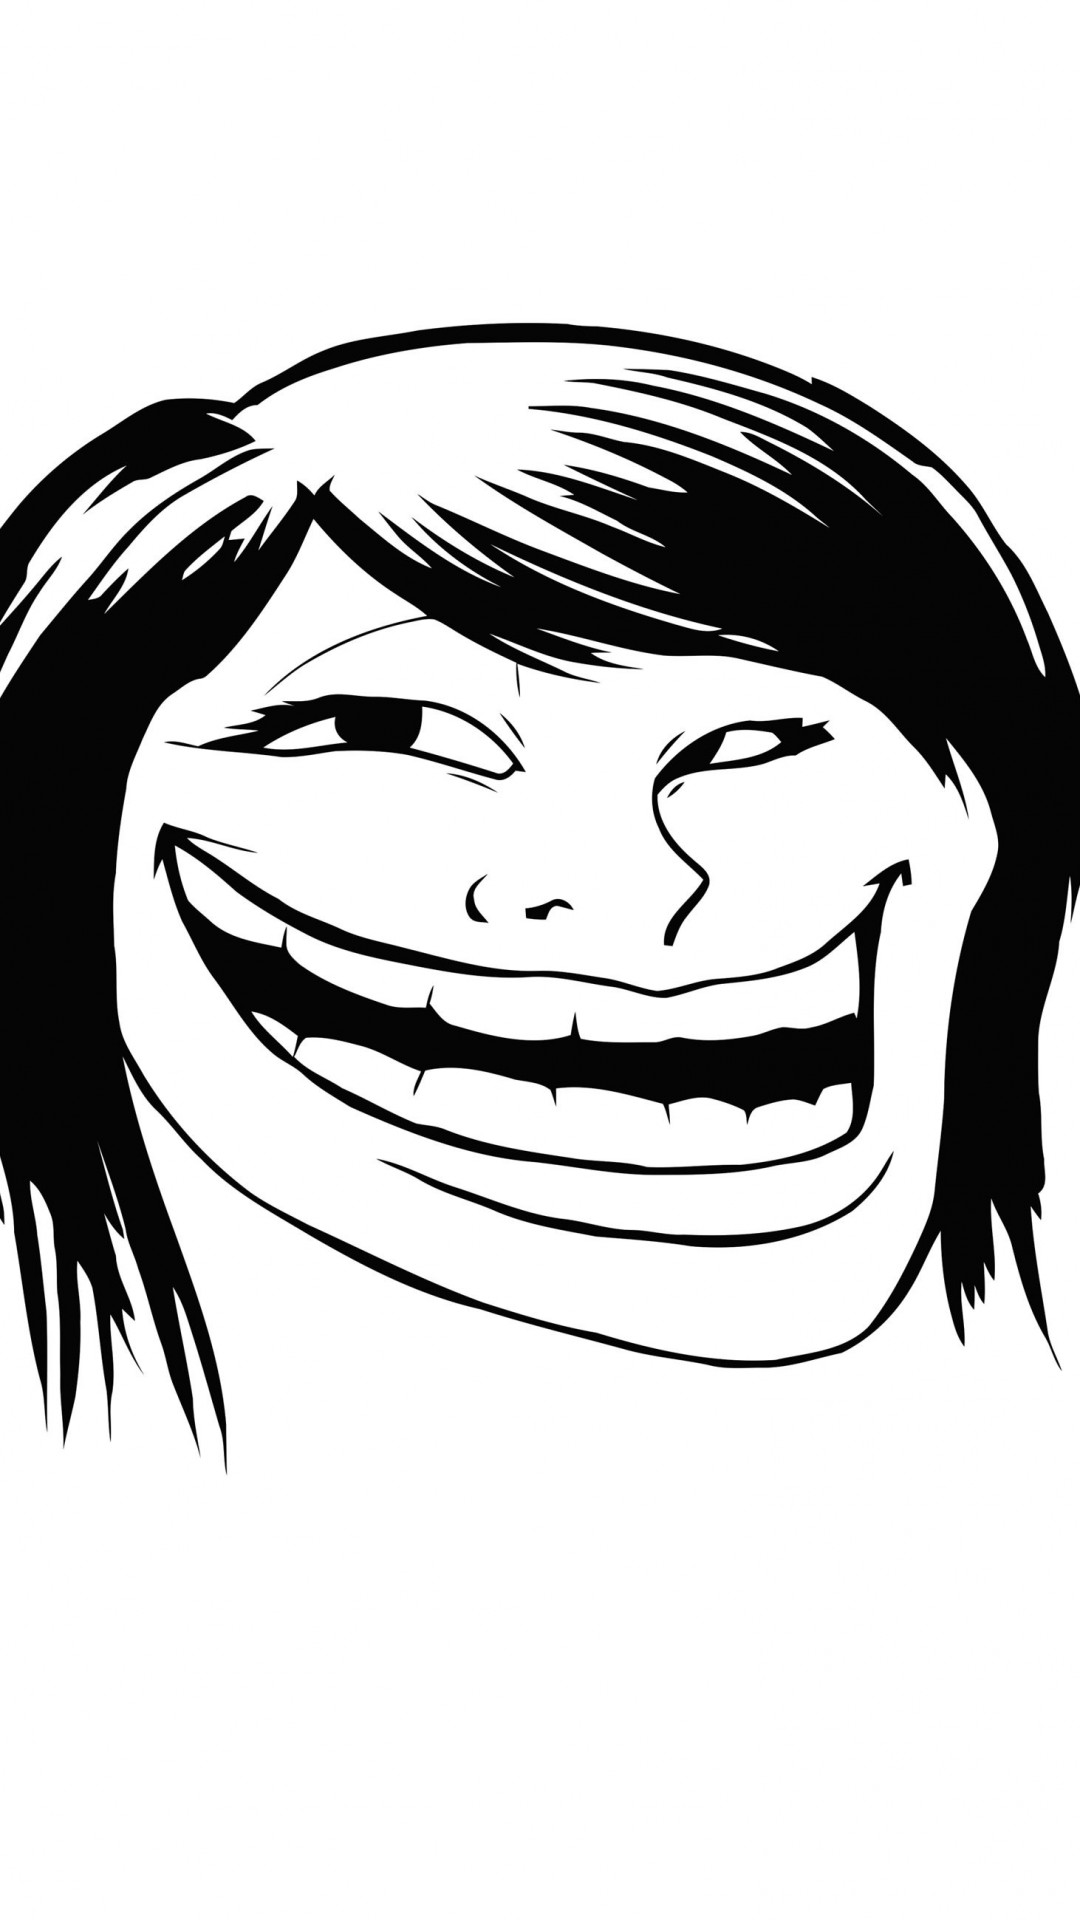 Female Troll Face Meme Wallpaper for SONY Xperia Z3